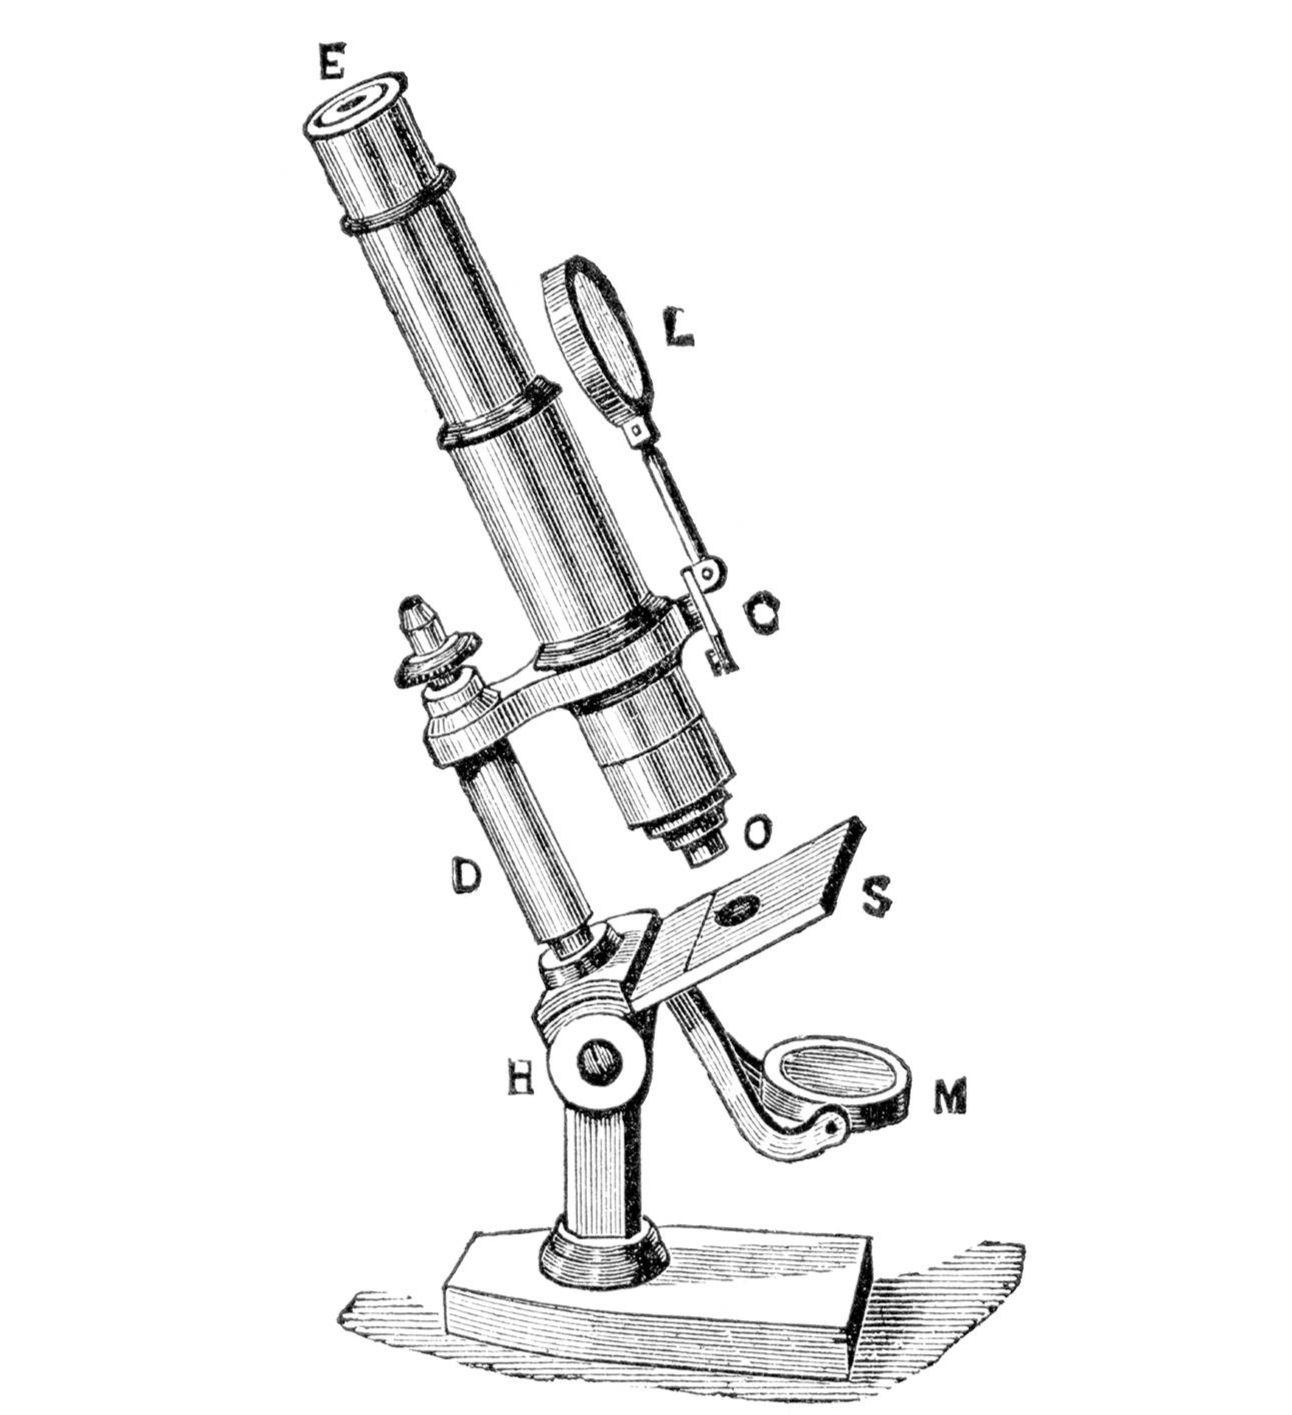 A microscope